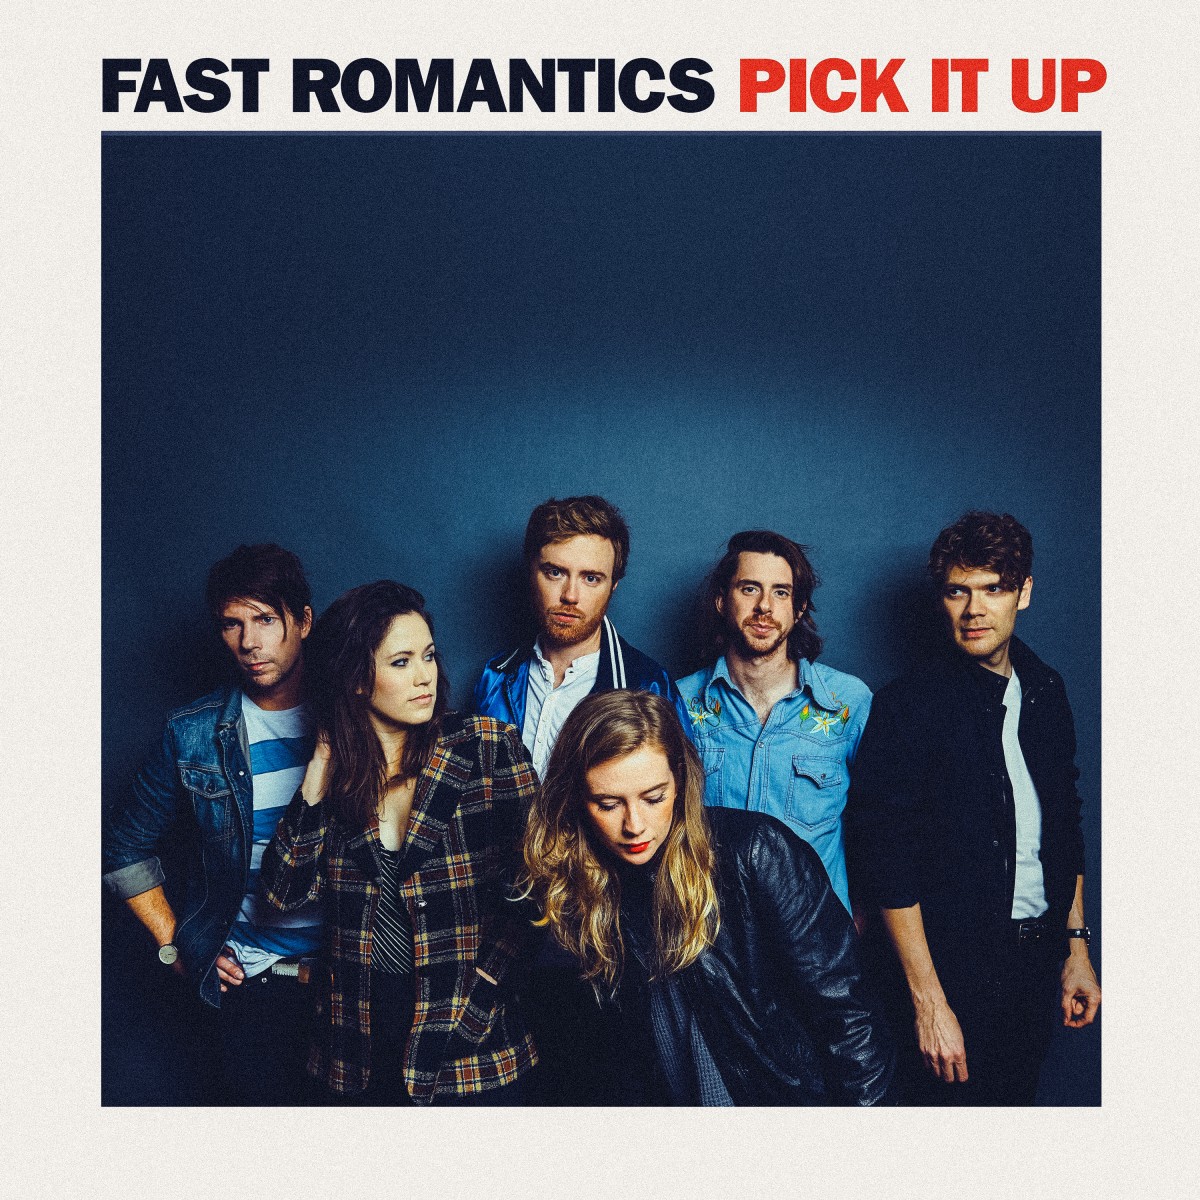 Fast Romantics Announce “Pick It Up” Canadian Dates For Ontario & Quebec